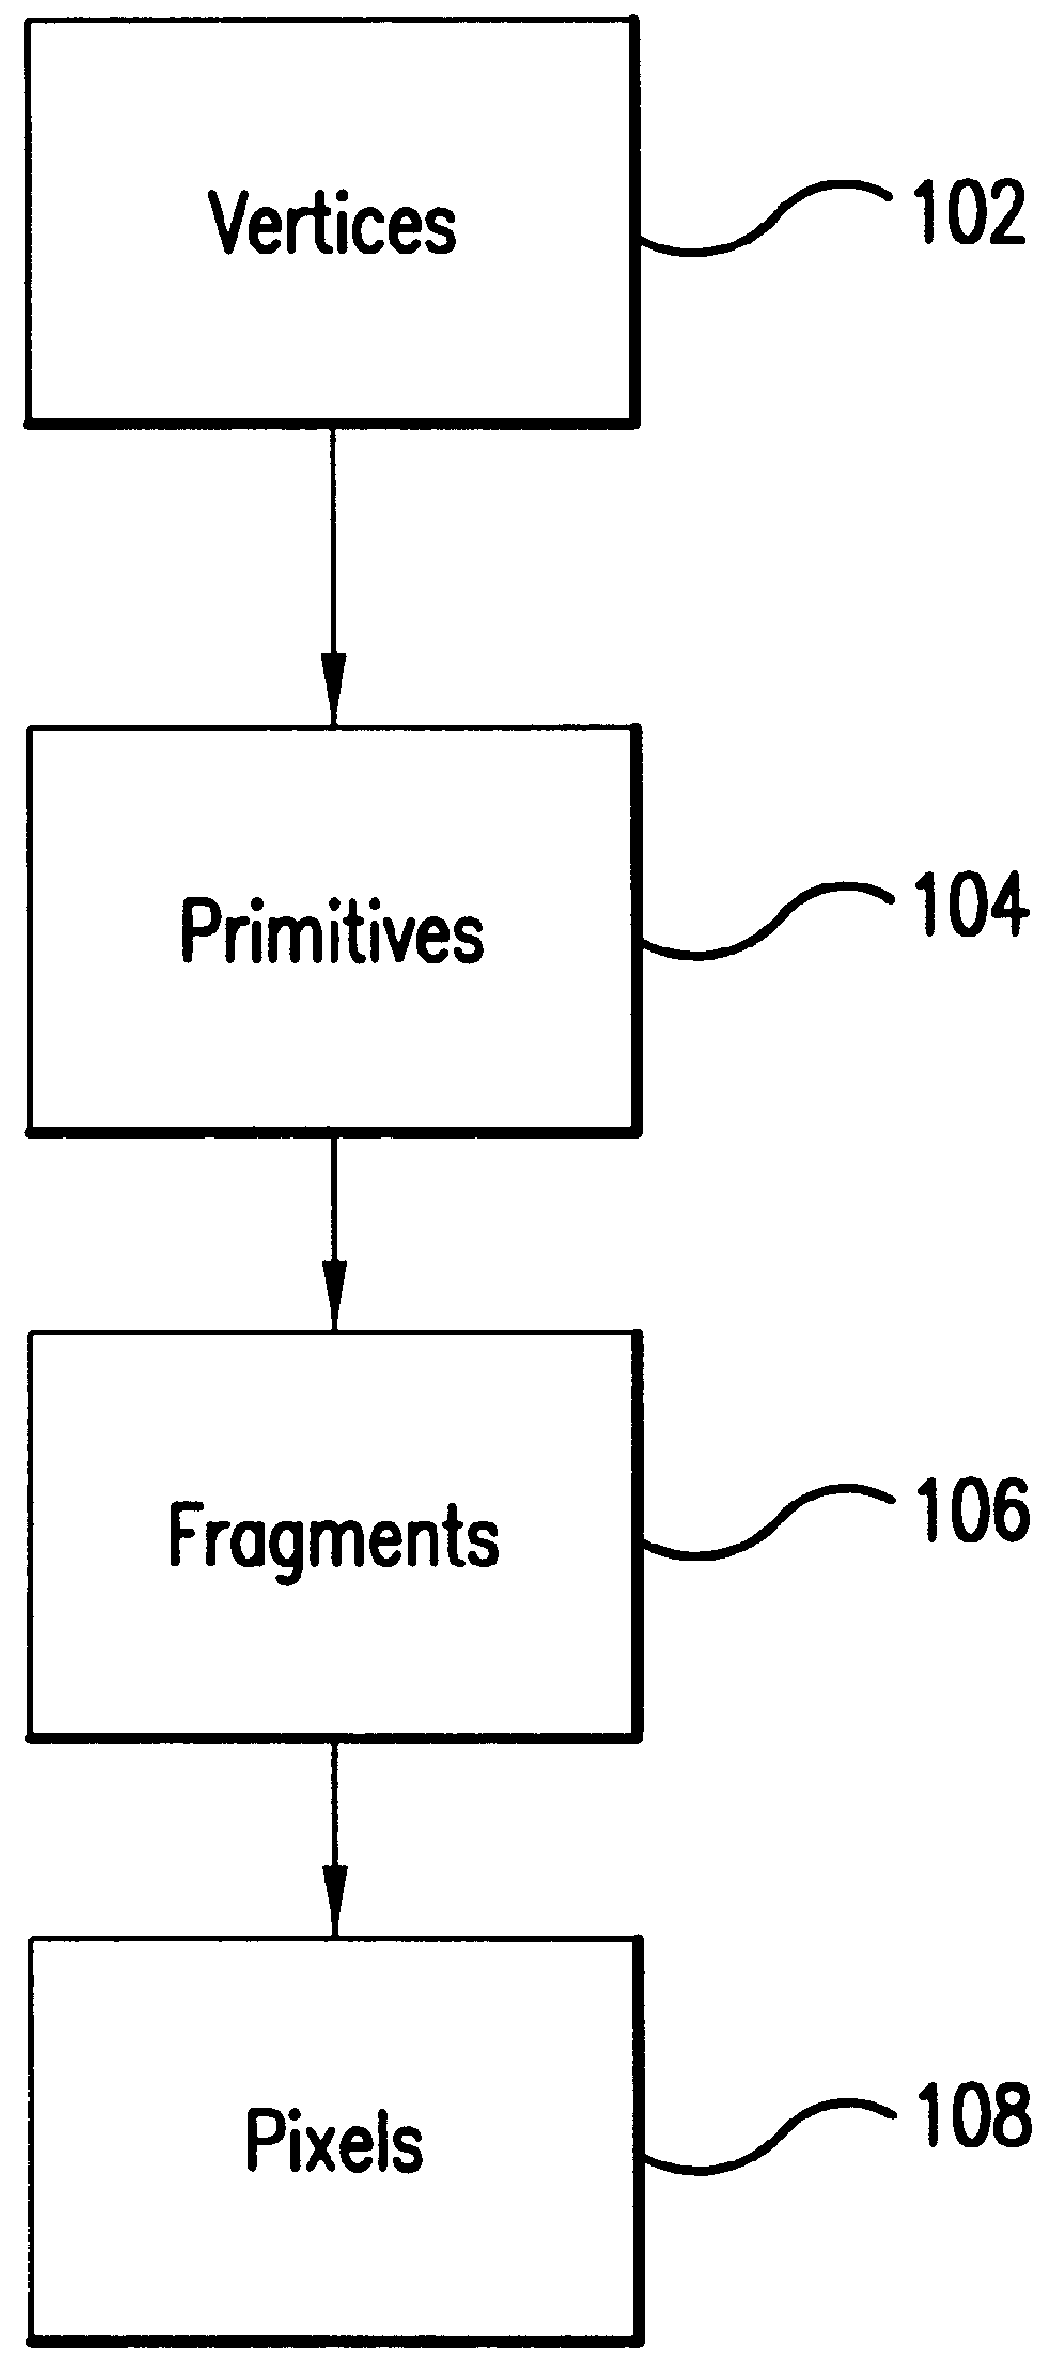 System and method for performing high-precision, multi-channel blending using multiple blending passes